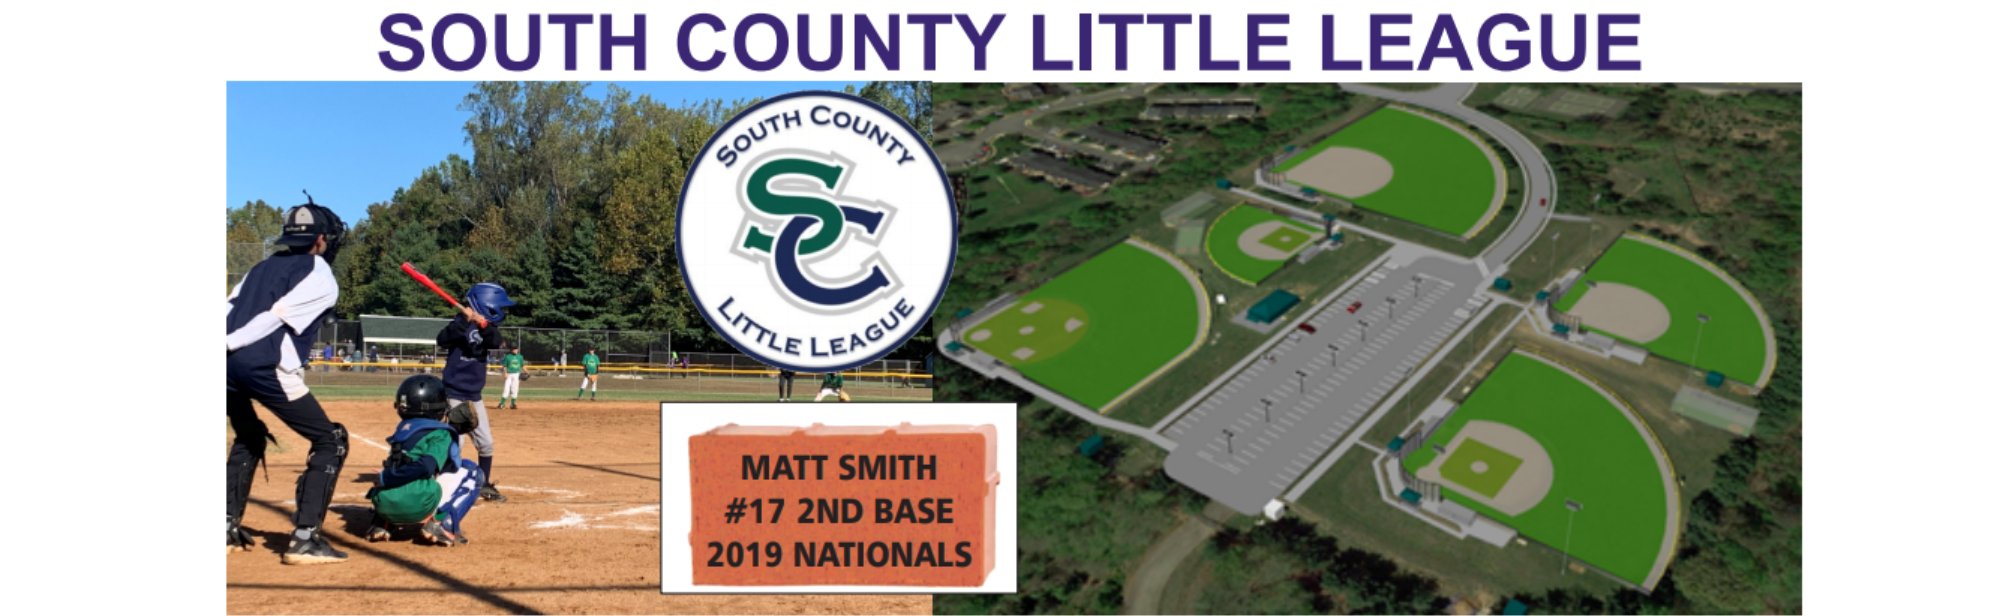 South County Little League Buy A Brick Fundraiser